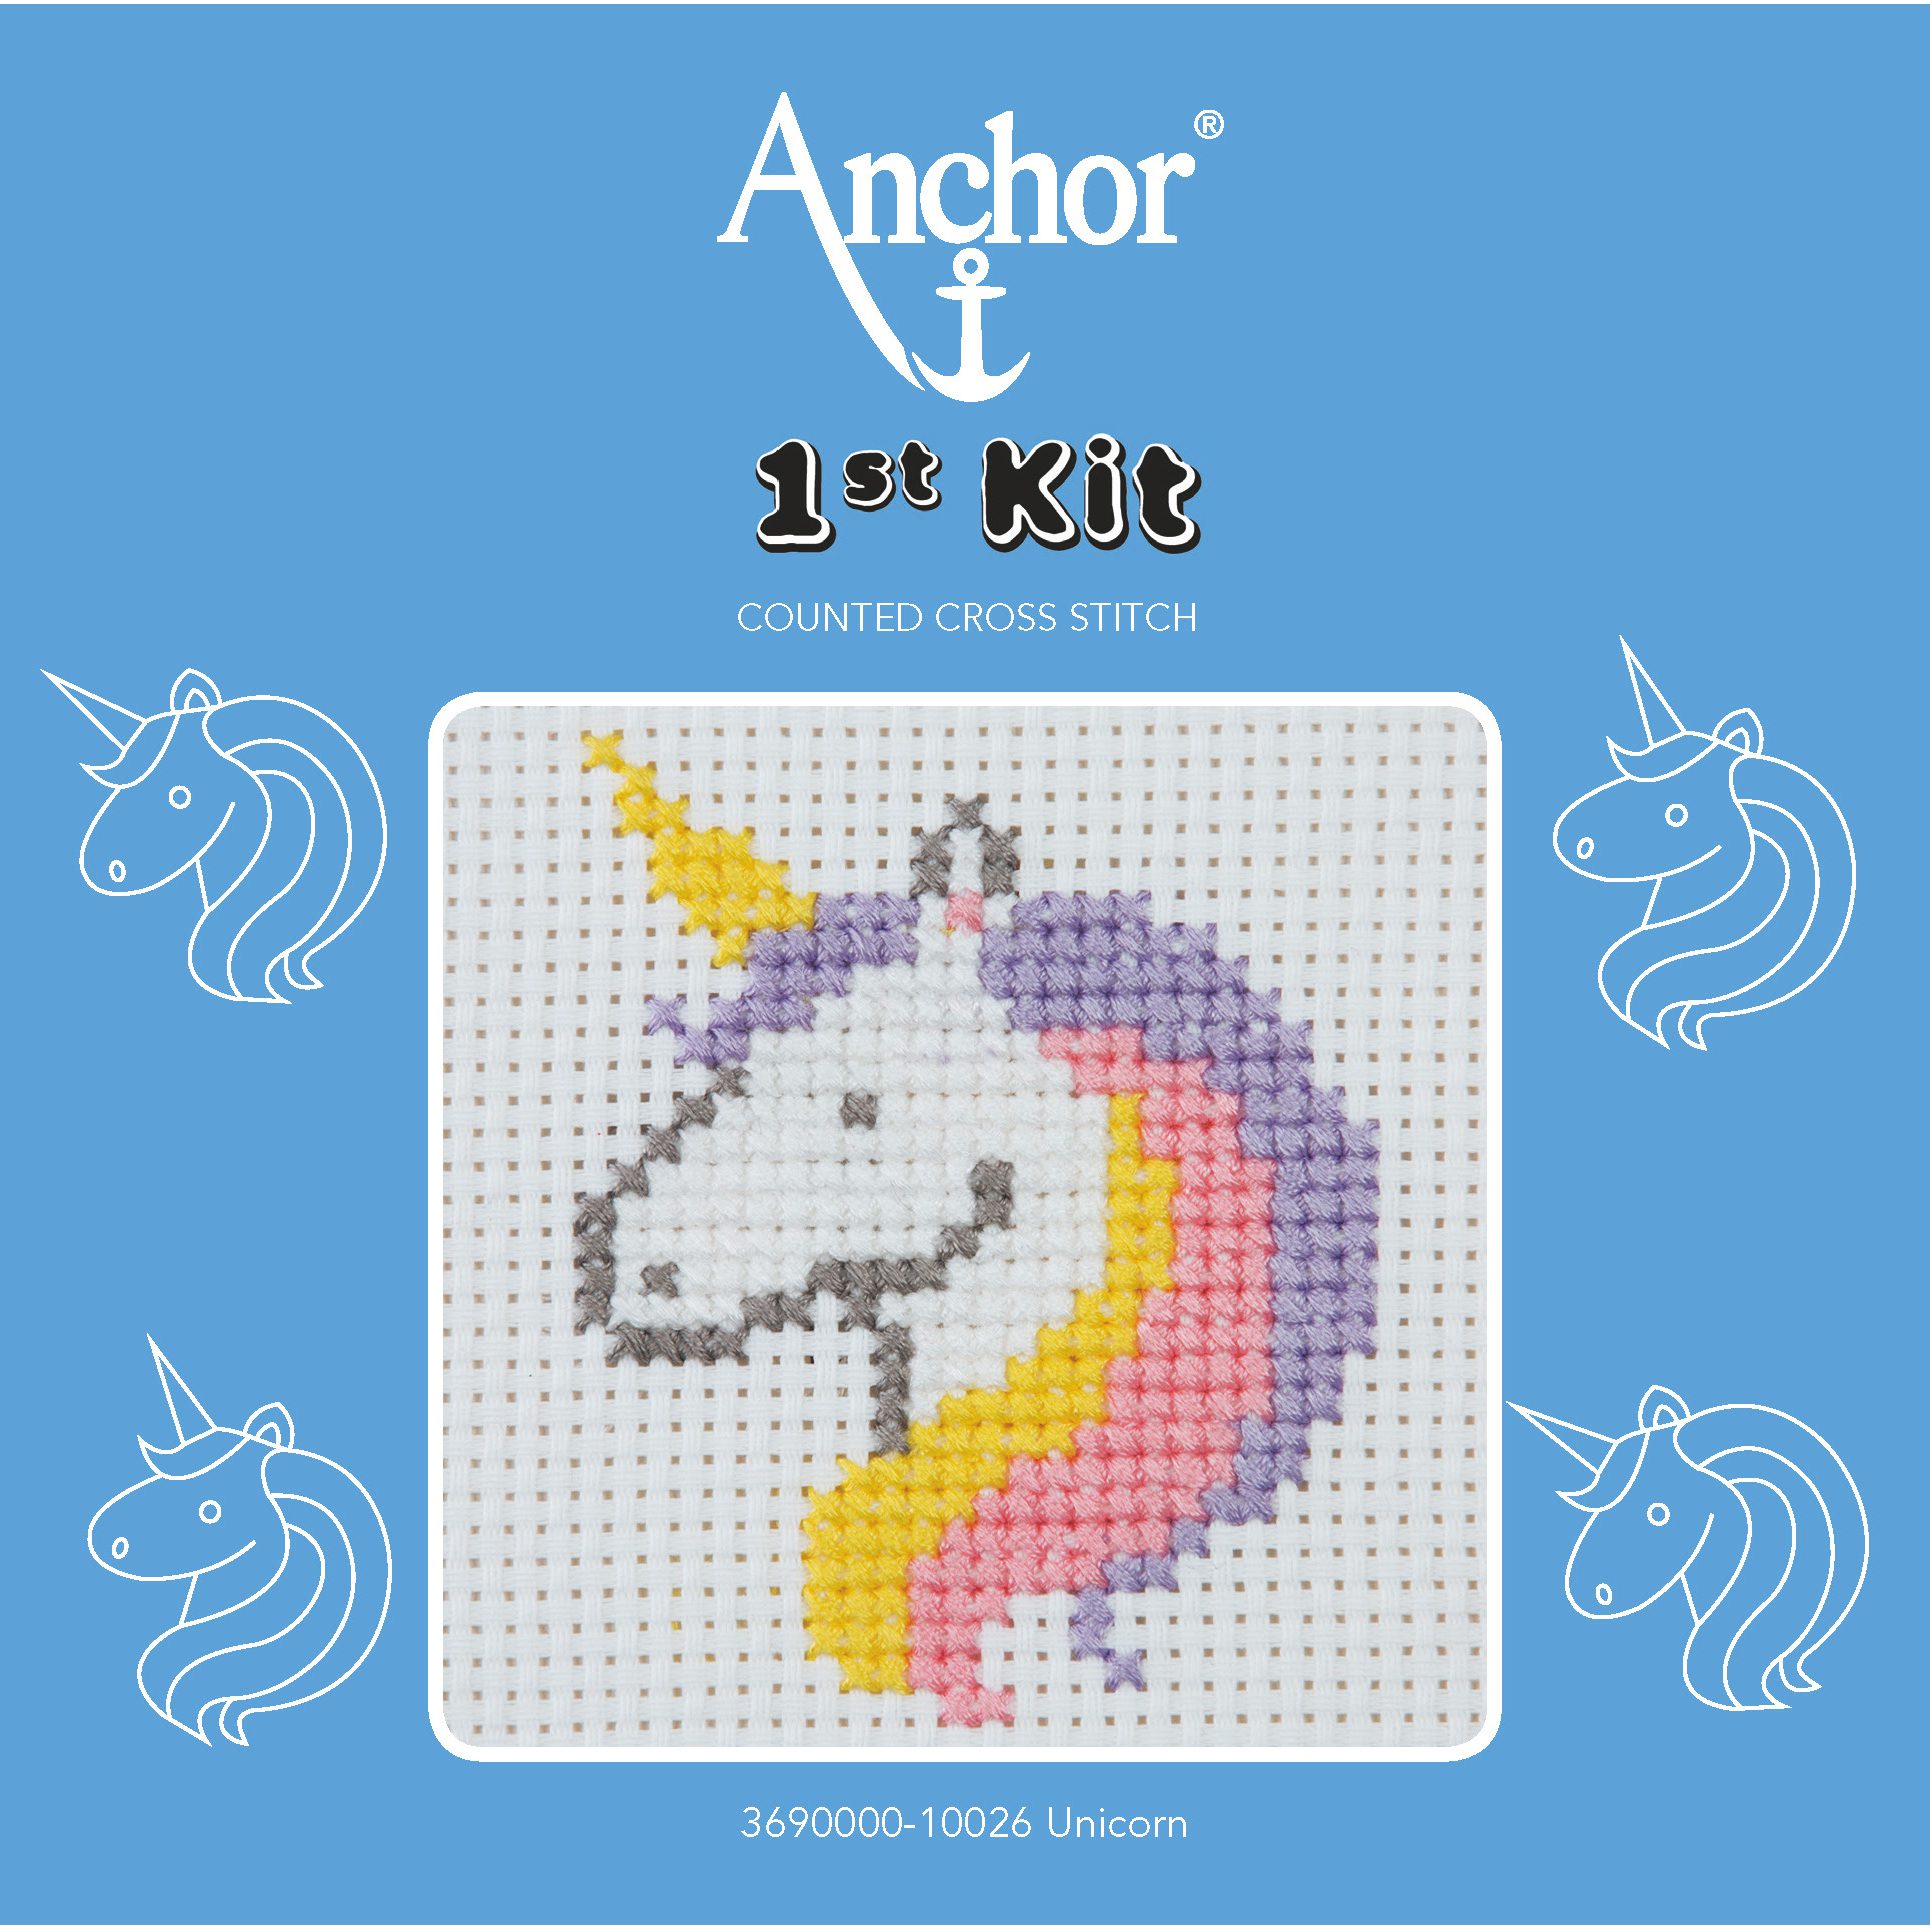 Anchor 1st Counted Cross Stitch Kit – Unicorn product image